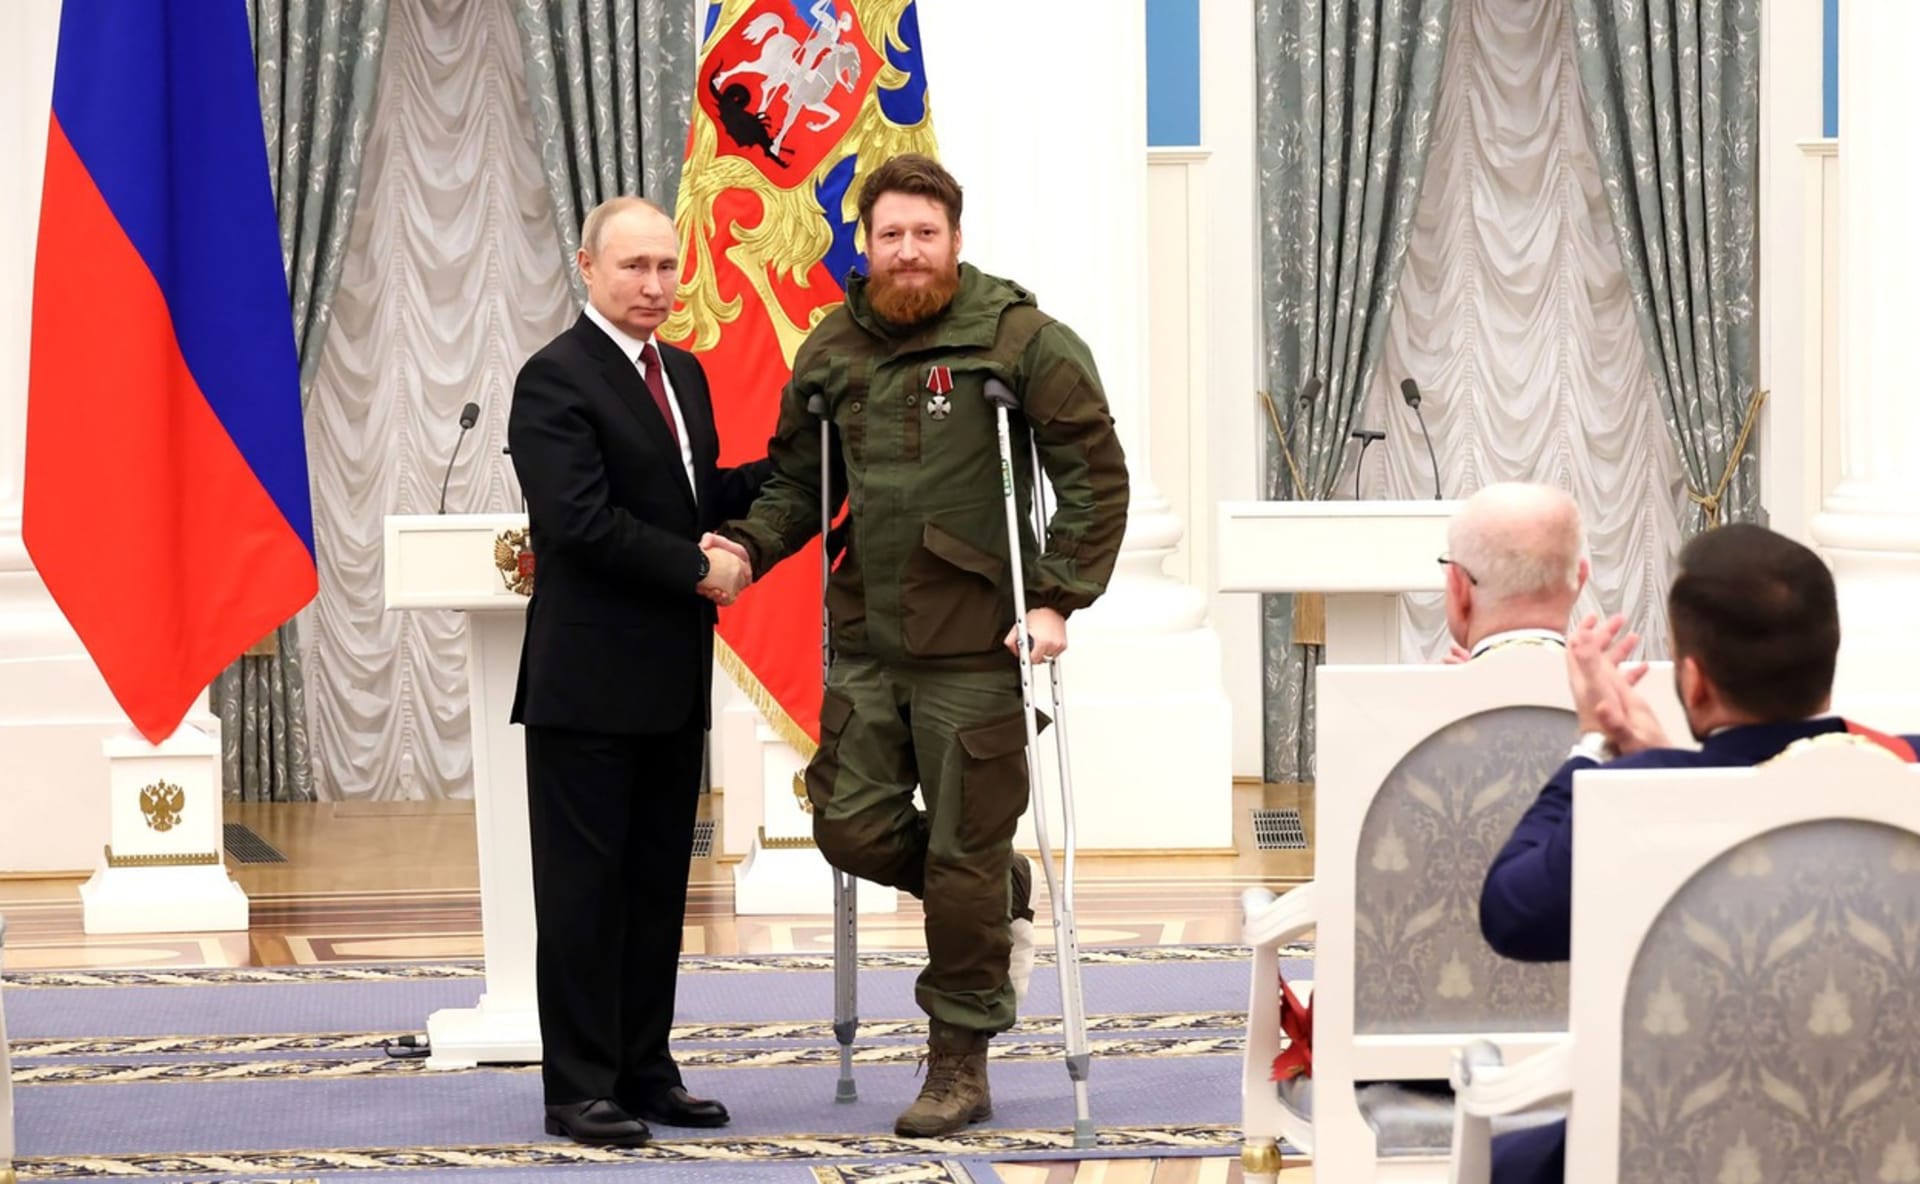 Vojenský bloger Semjon Pegov dostal vyznamenání od ruského prezidenta Vladimira Putina.